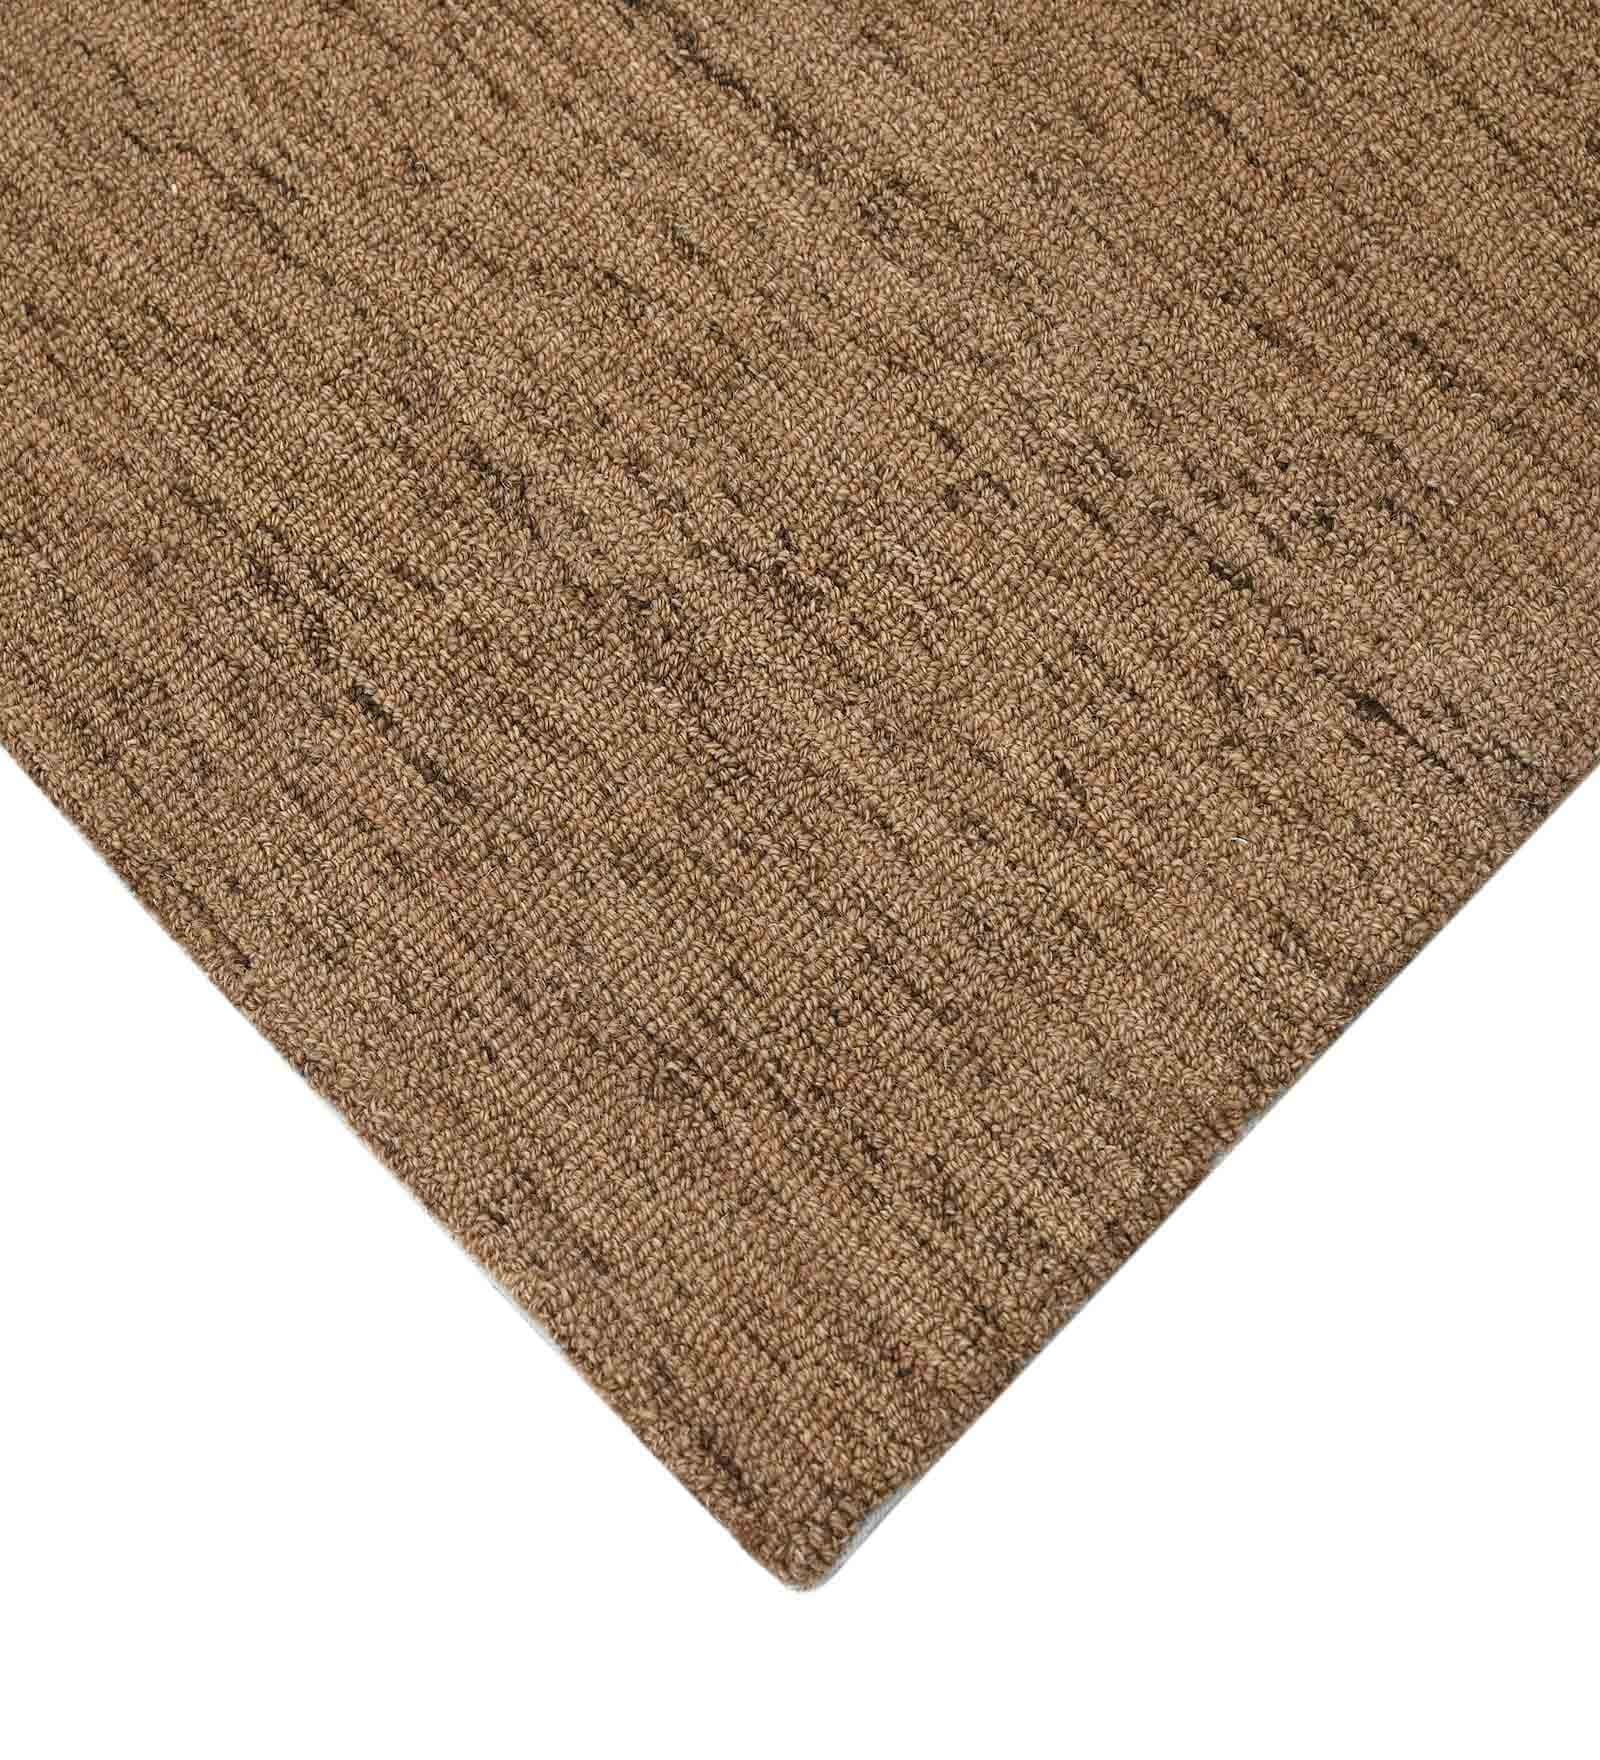 BROWN Wool & Viscose Canyan 8x10 Feet  Hand-Tufted Carpet - Rug